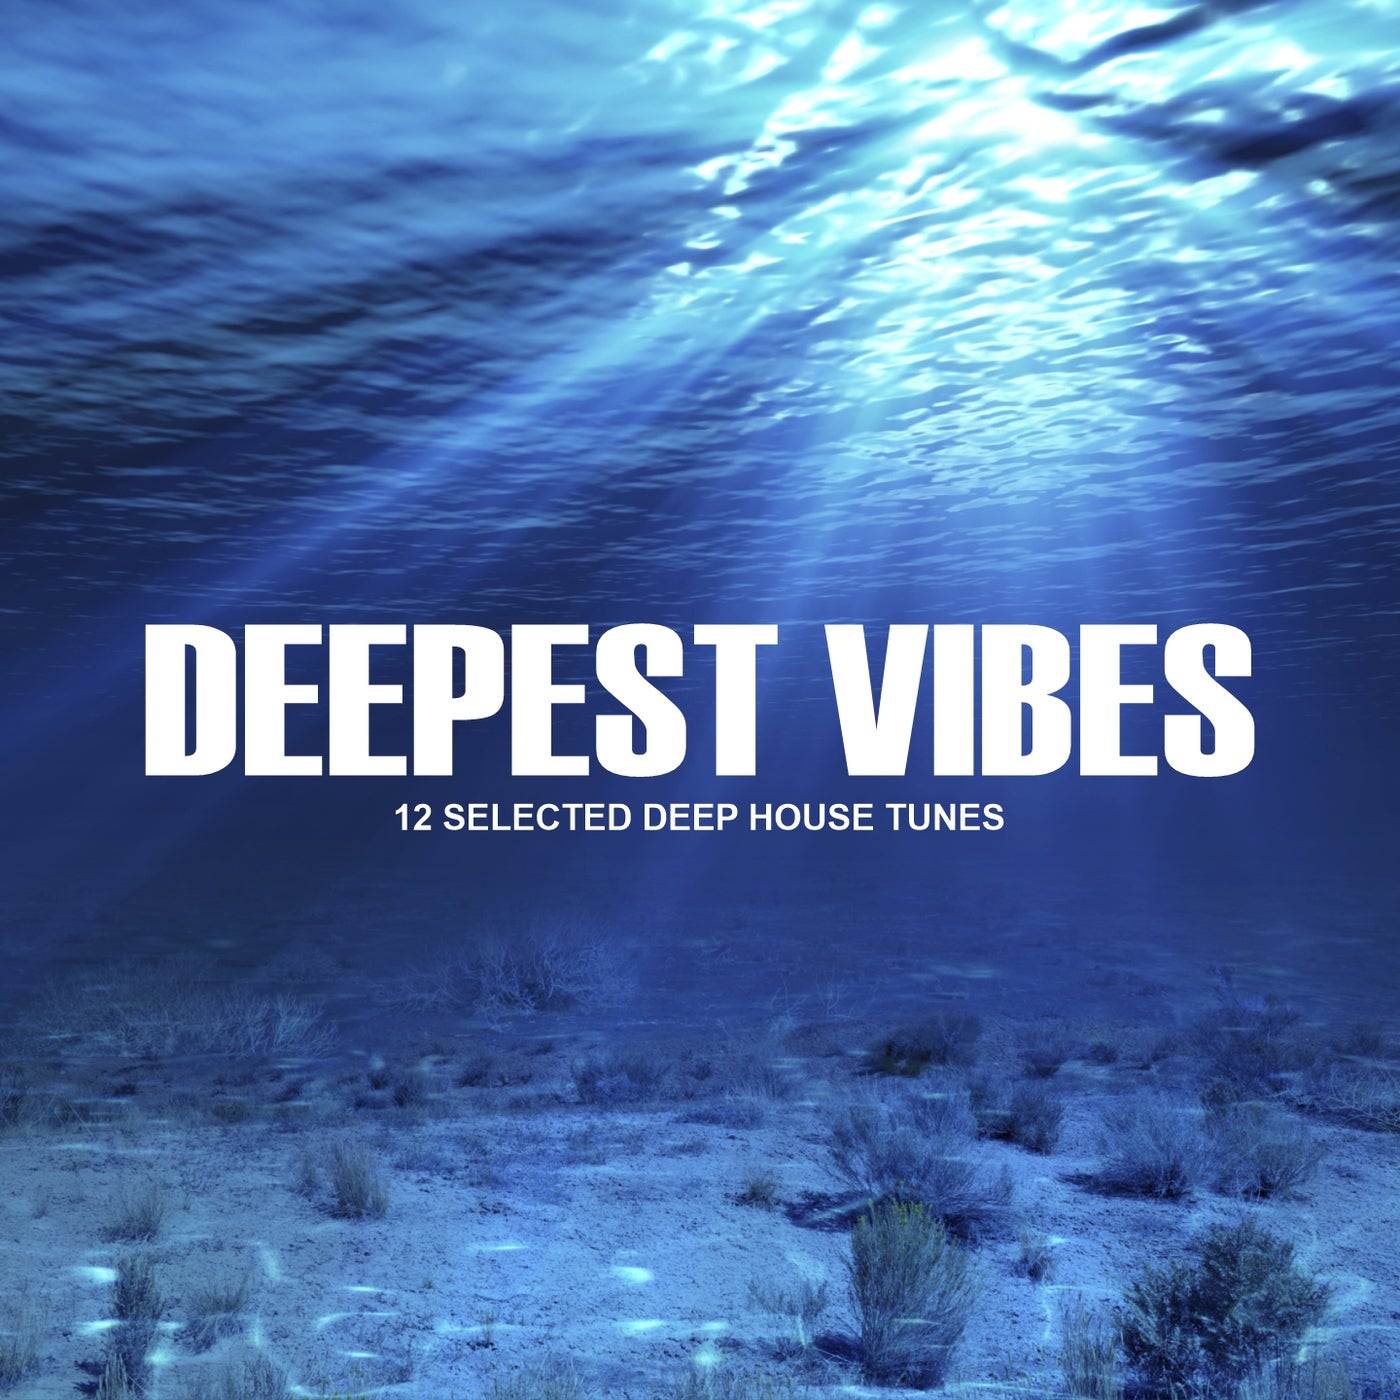 Deep vibes